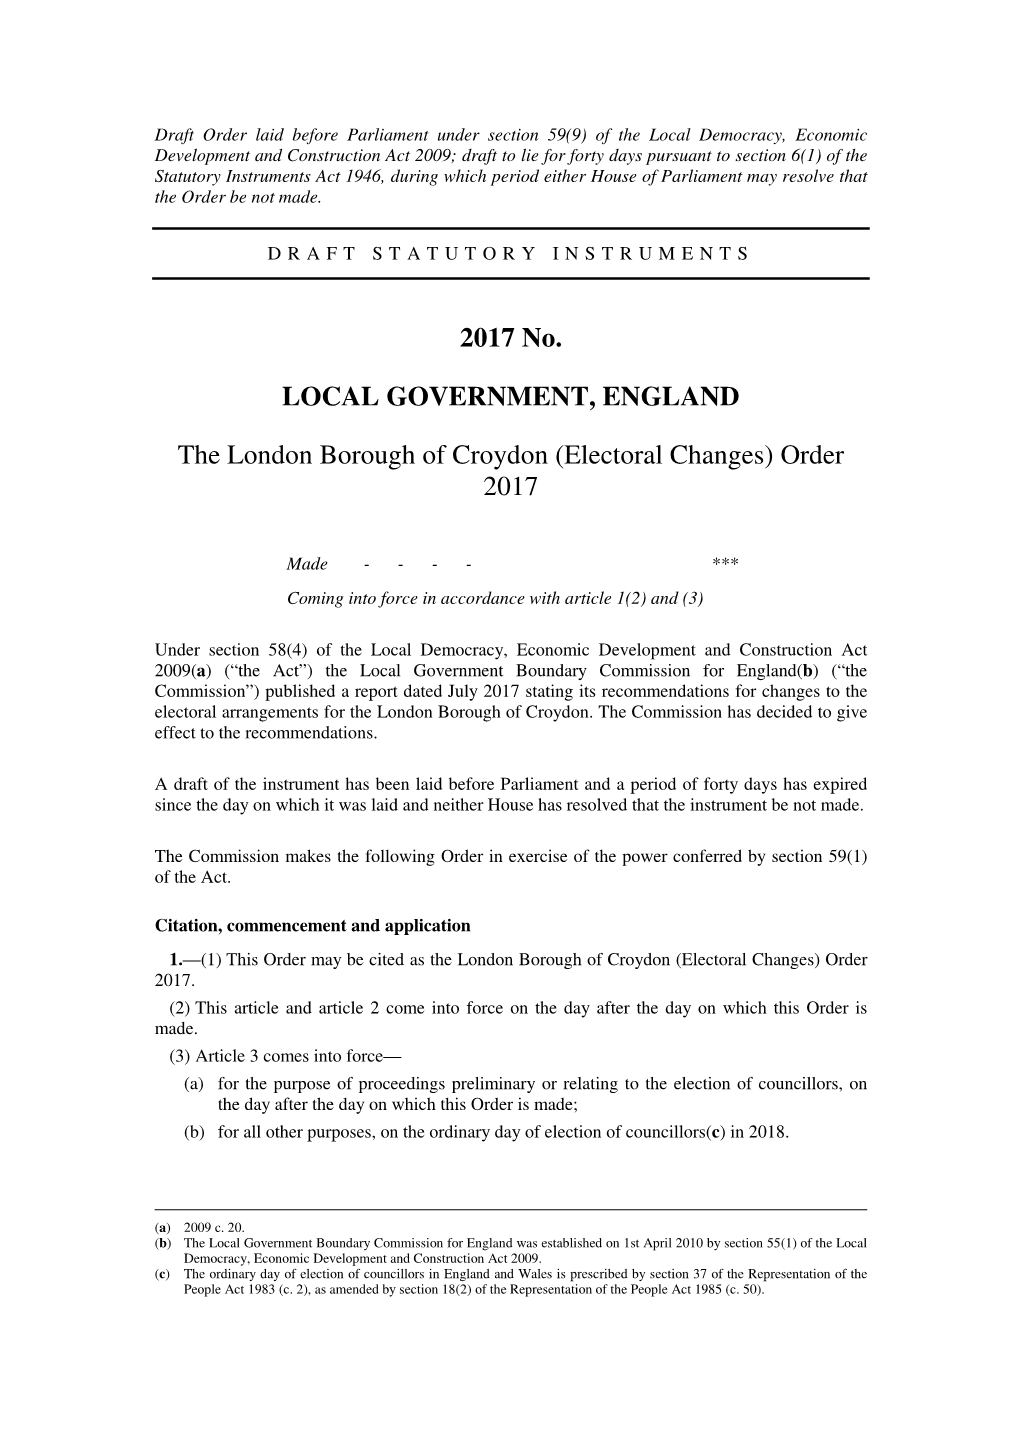 The London Borough of Croydon (Electoral Changes) Order 2017